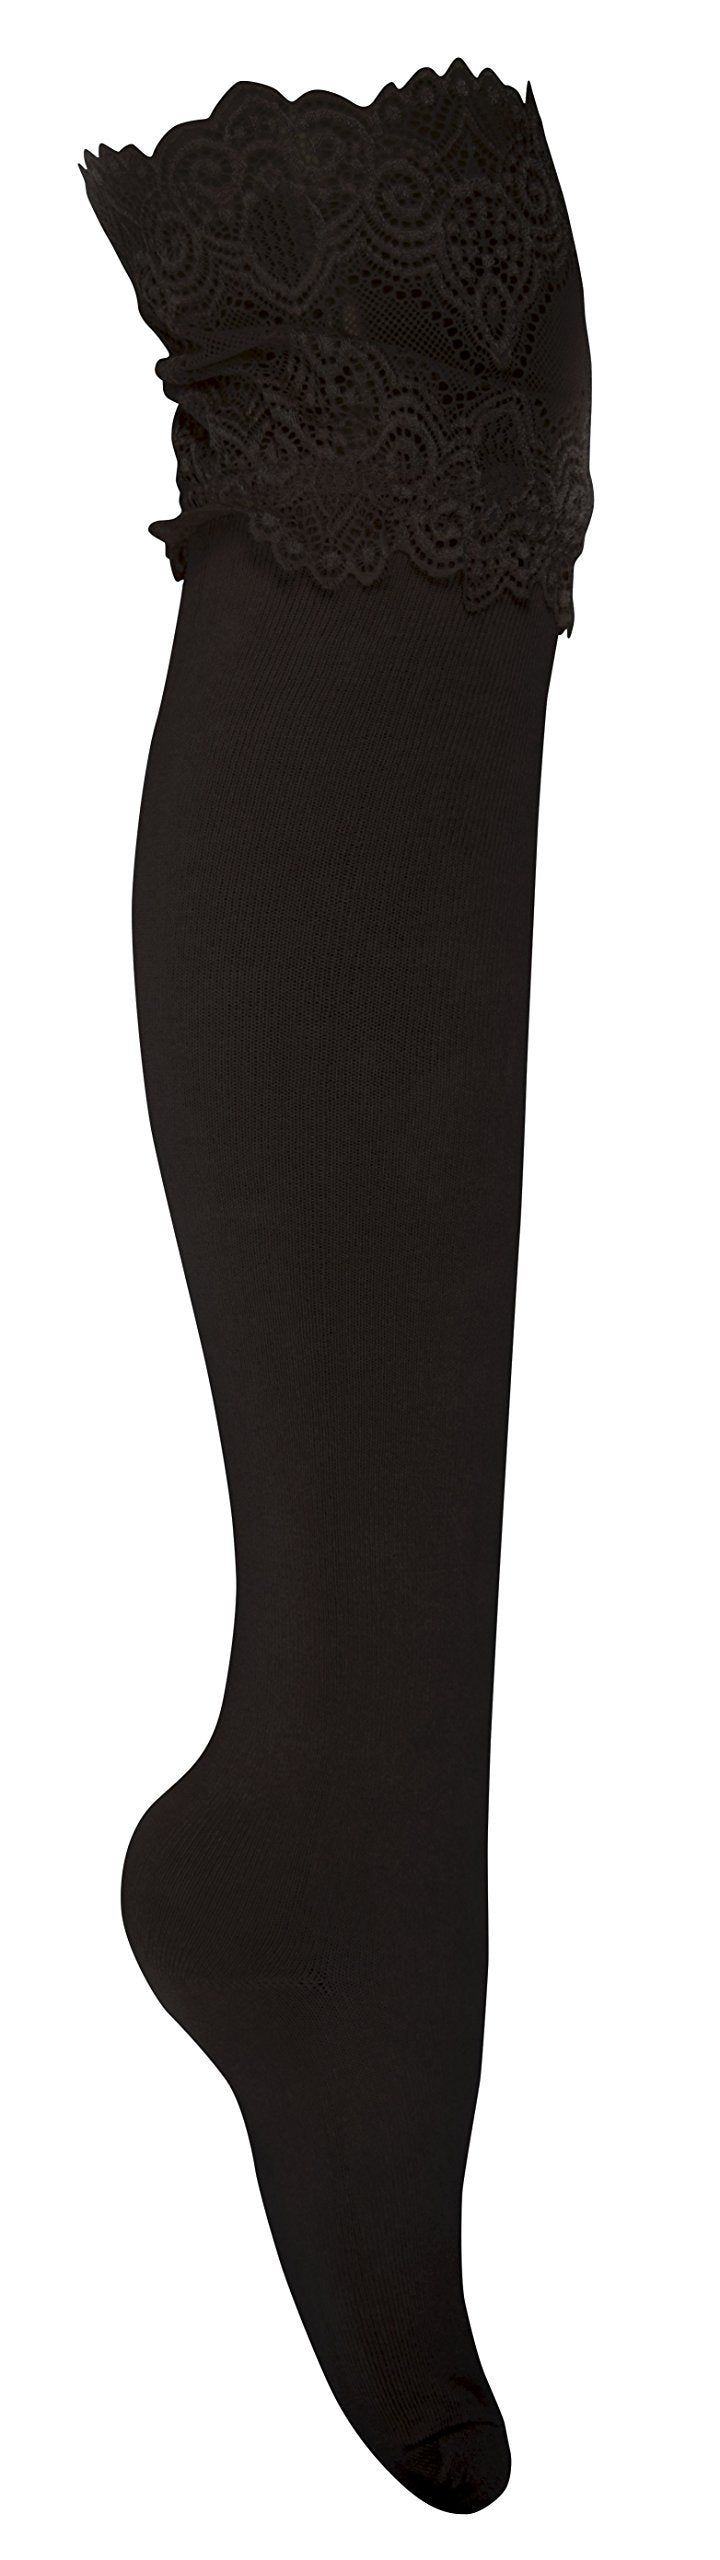 Wide-Lace Jersey Knit Knee-High Cotton Boot Socks - Ebony